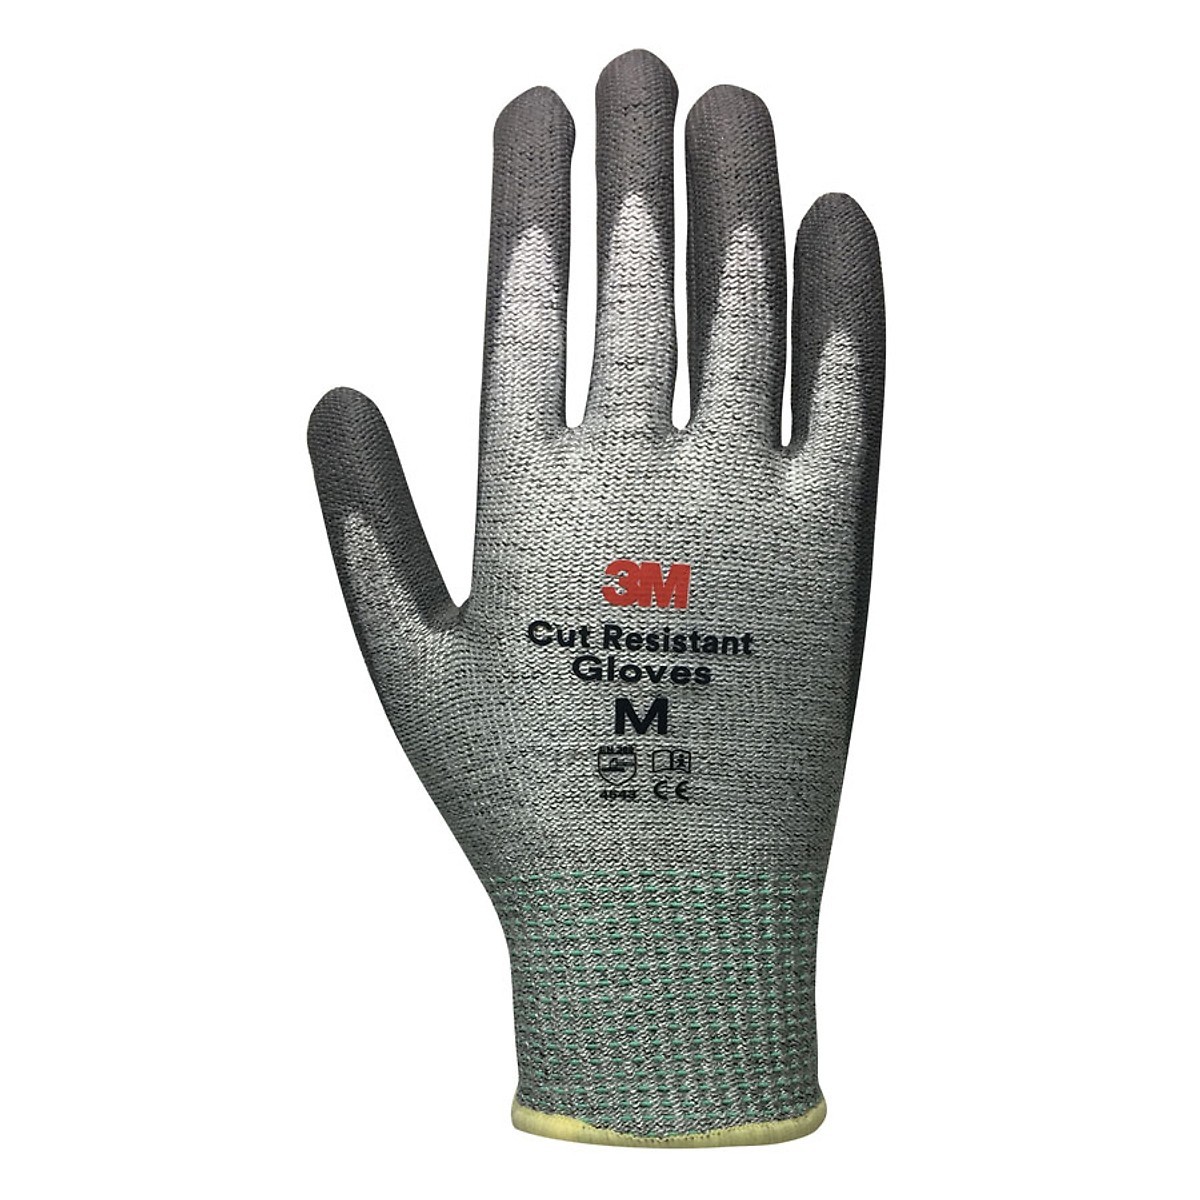 3M Cut Resistant Gloves (ATG-3M-LV3-XL)